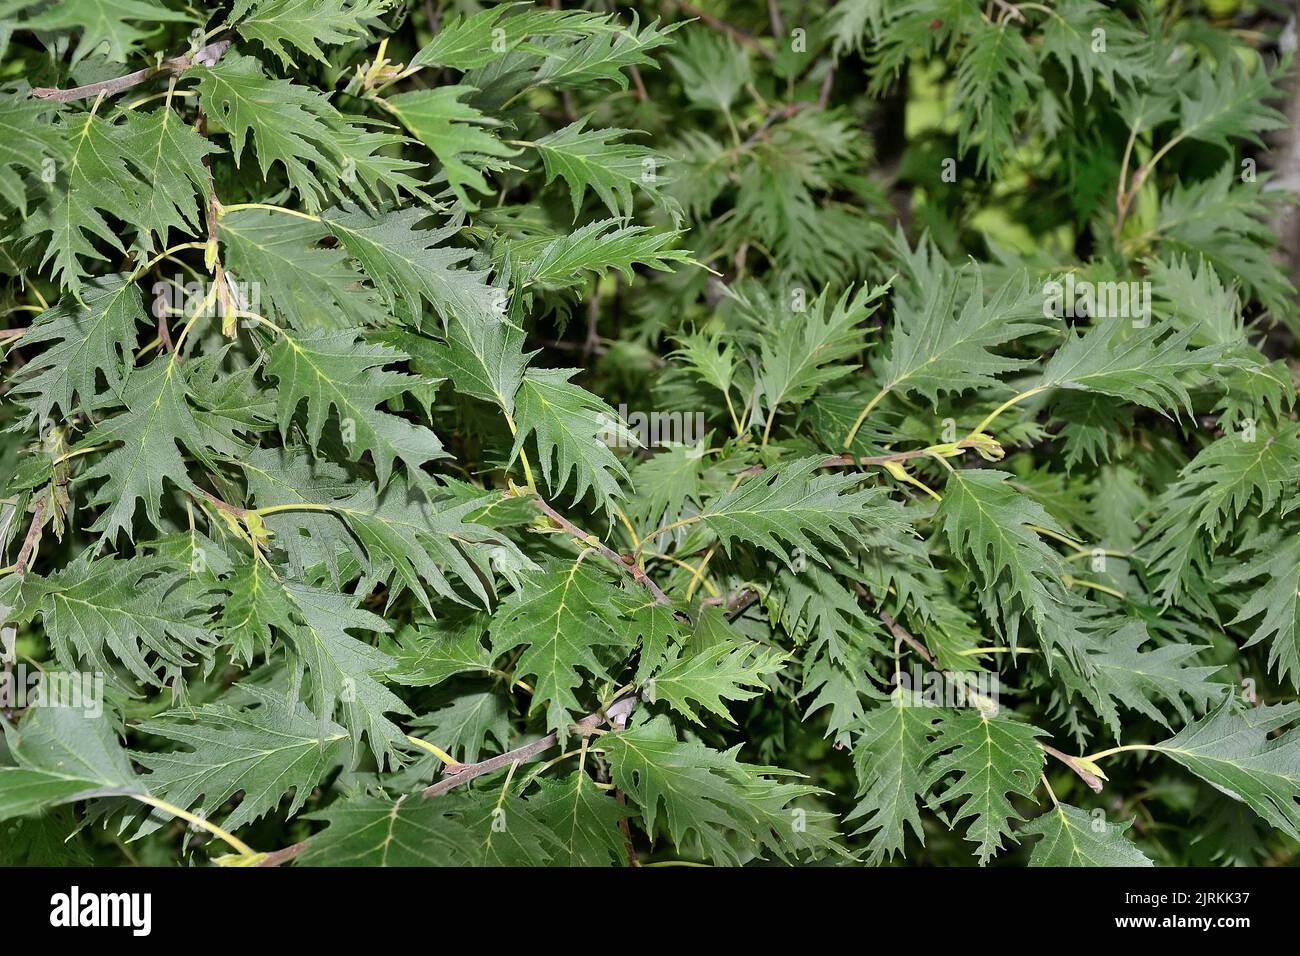 Alder gris o Alnus incana 'laciniata' - ramas de plantas raras con hojas serradas de color verde oscuro talladas de cerca - fondo botánica de verano natural. Se Foto de stock